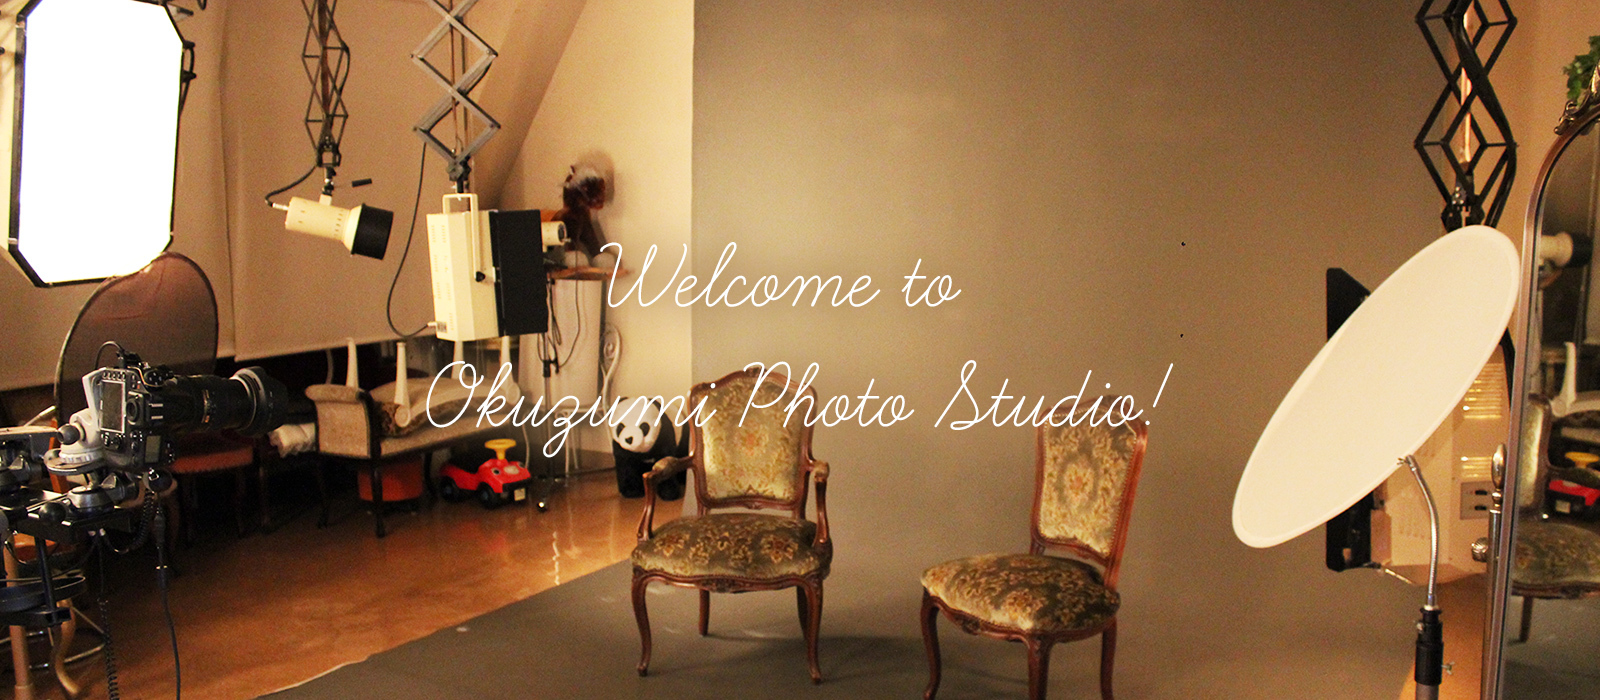 Welcome to Okuzumi Photo Studio!